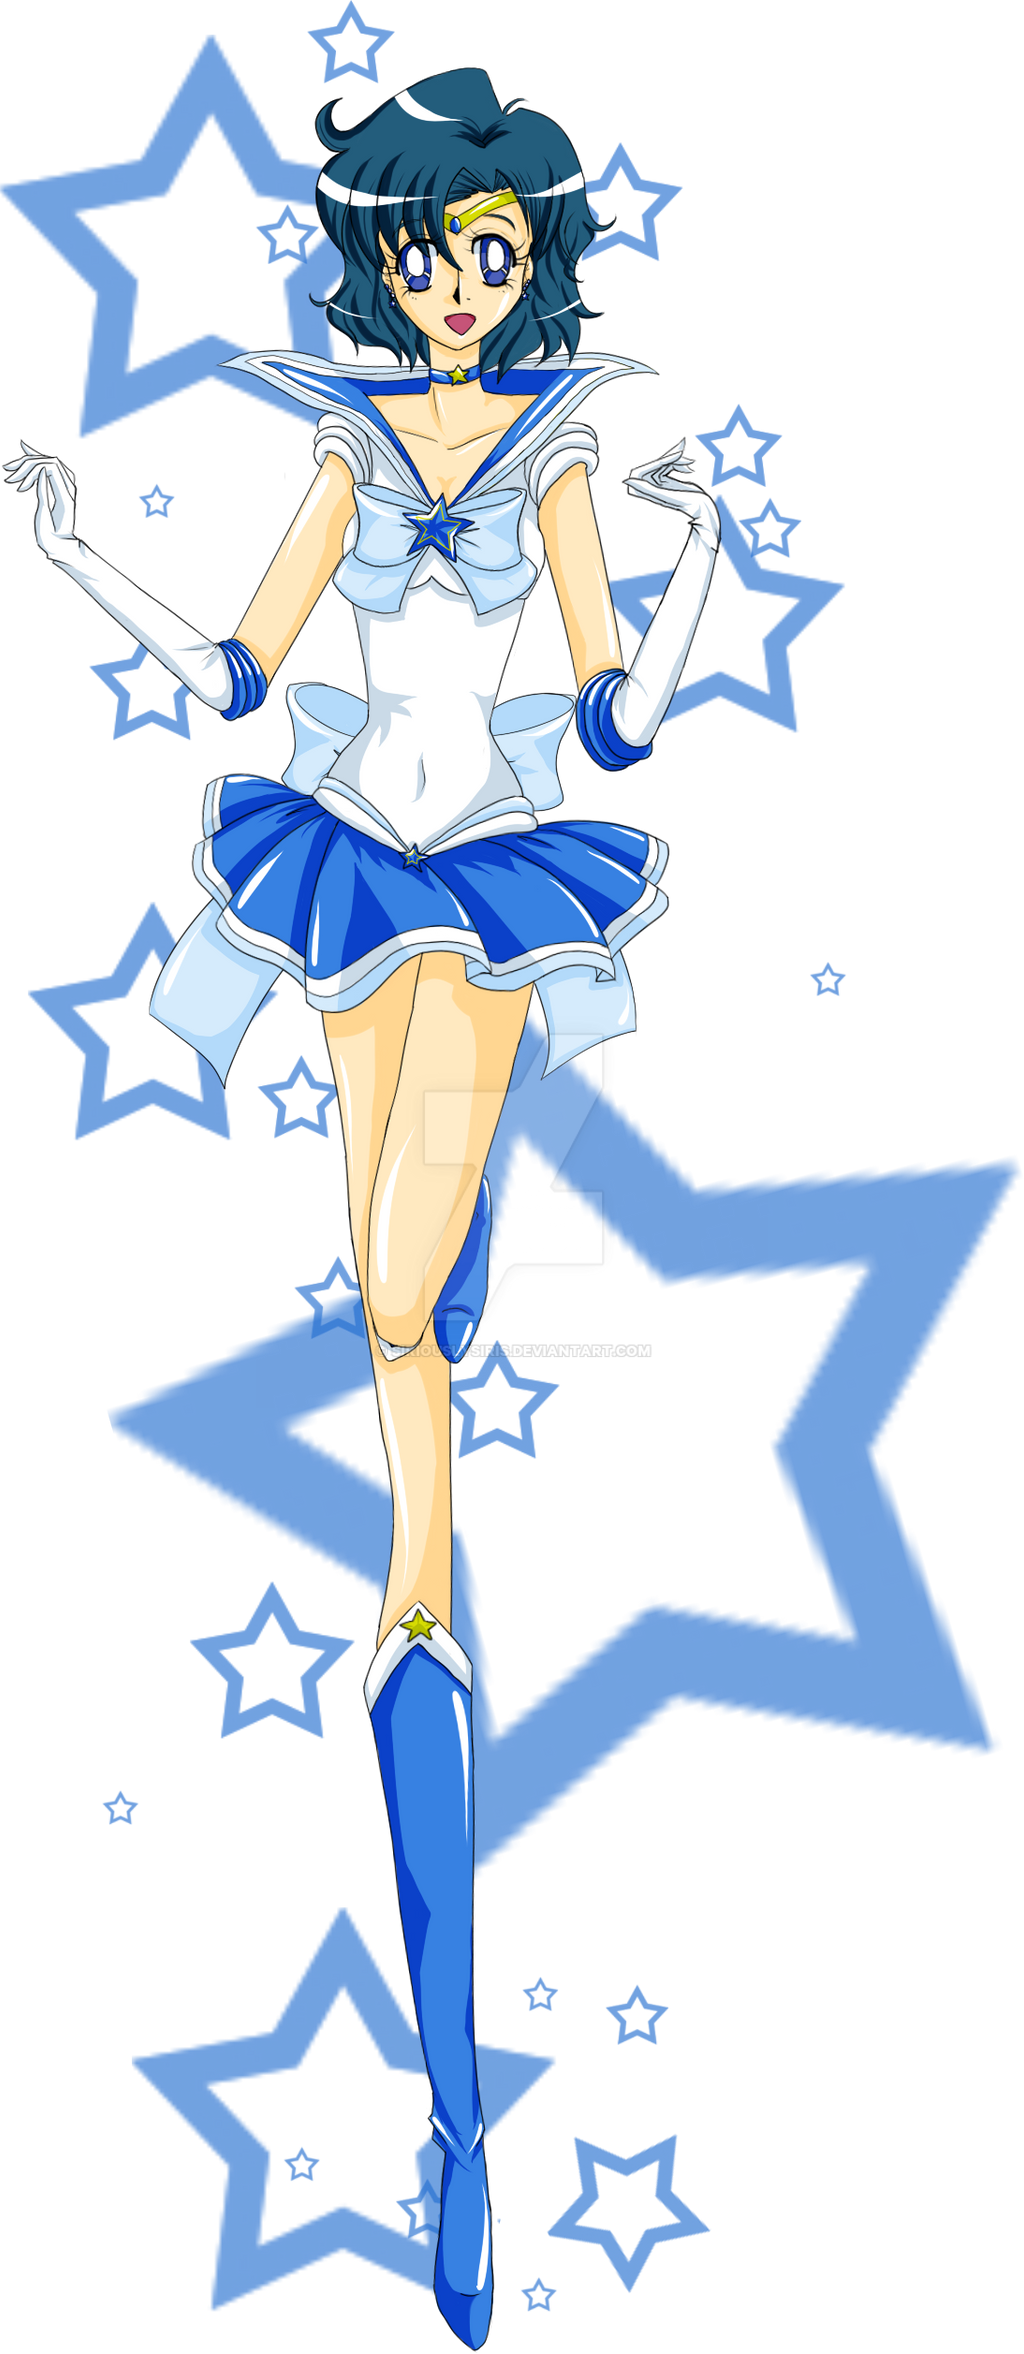 SailorMercury